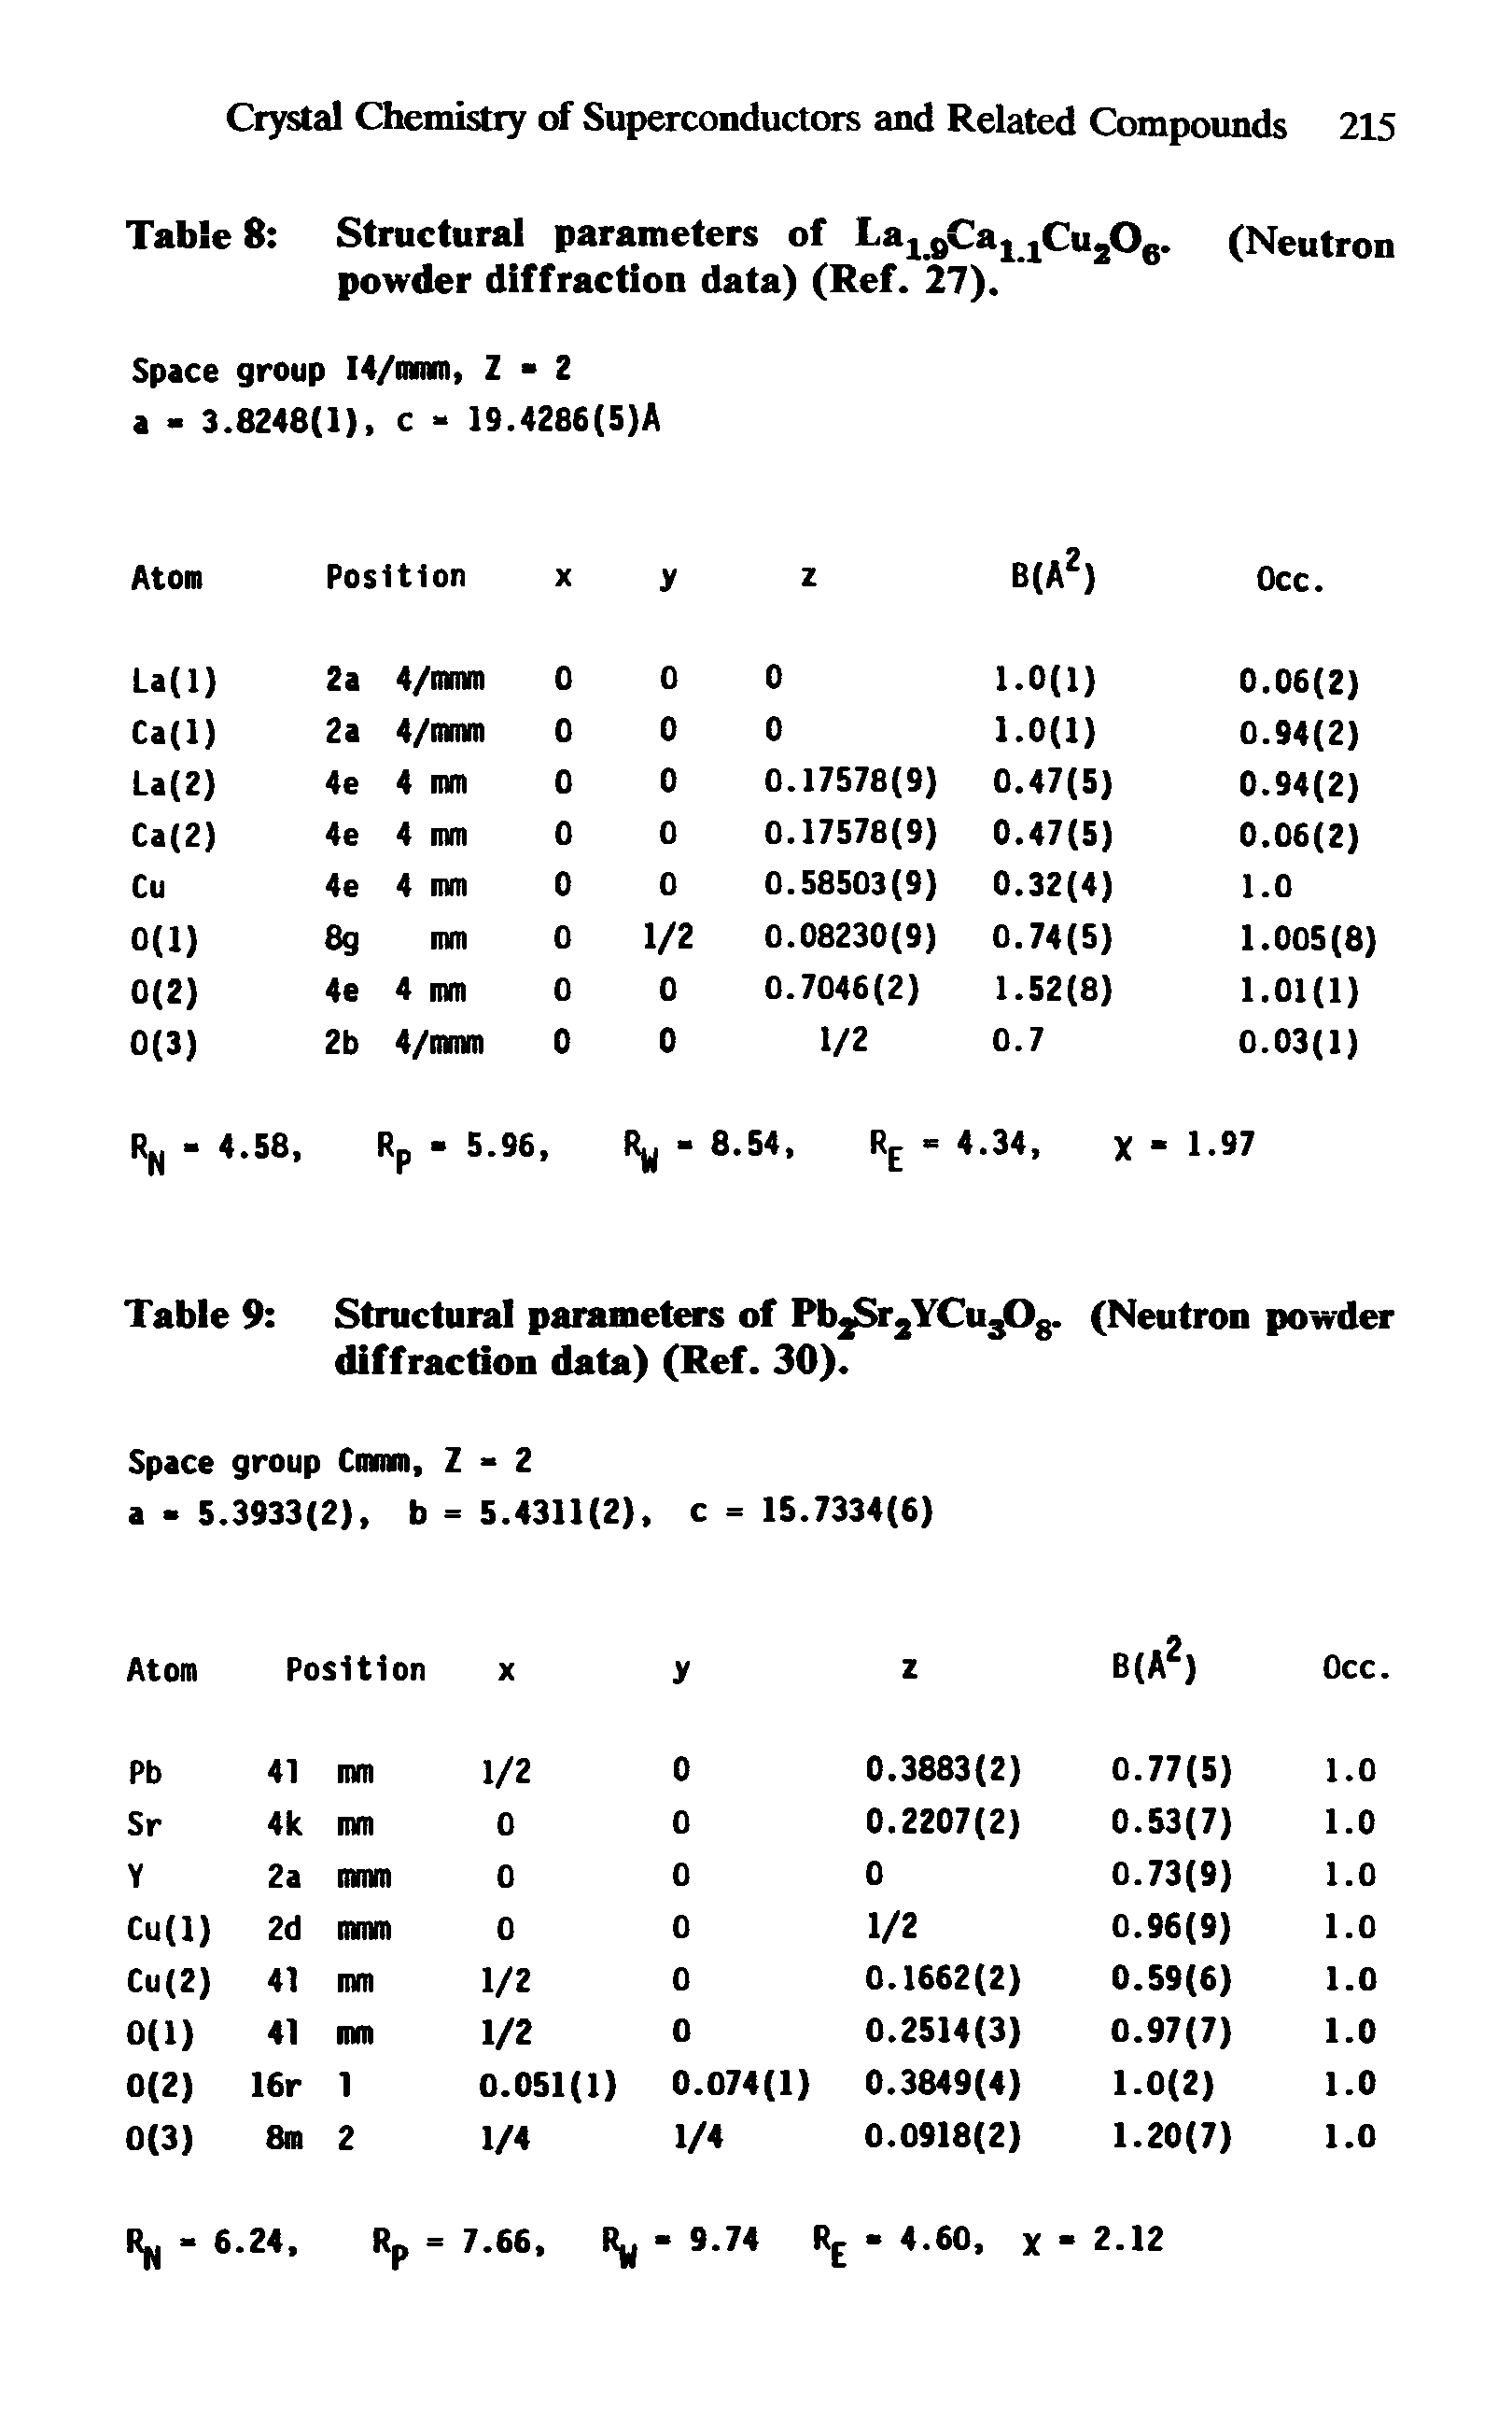 Table 8 Structural parameters of La, 0Ca,, Cu,Oc. (Neutron powder diffraction data) (Ref. 27). ...